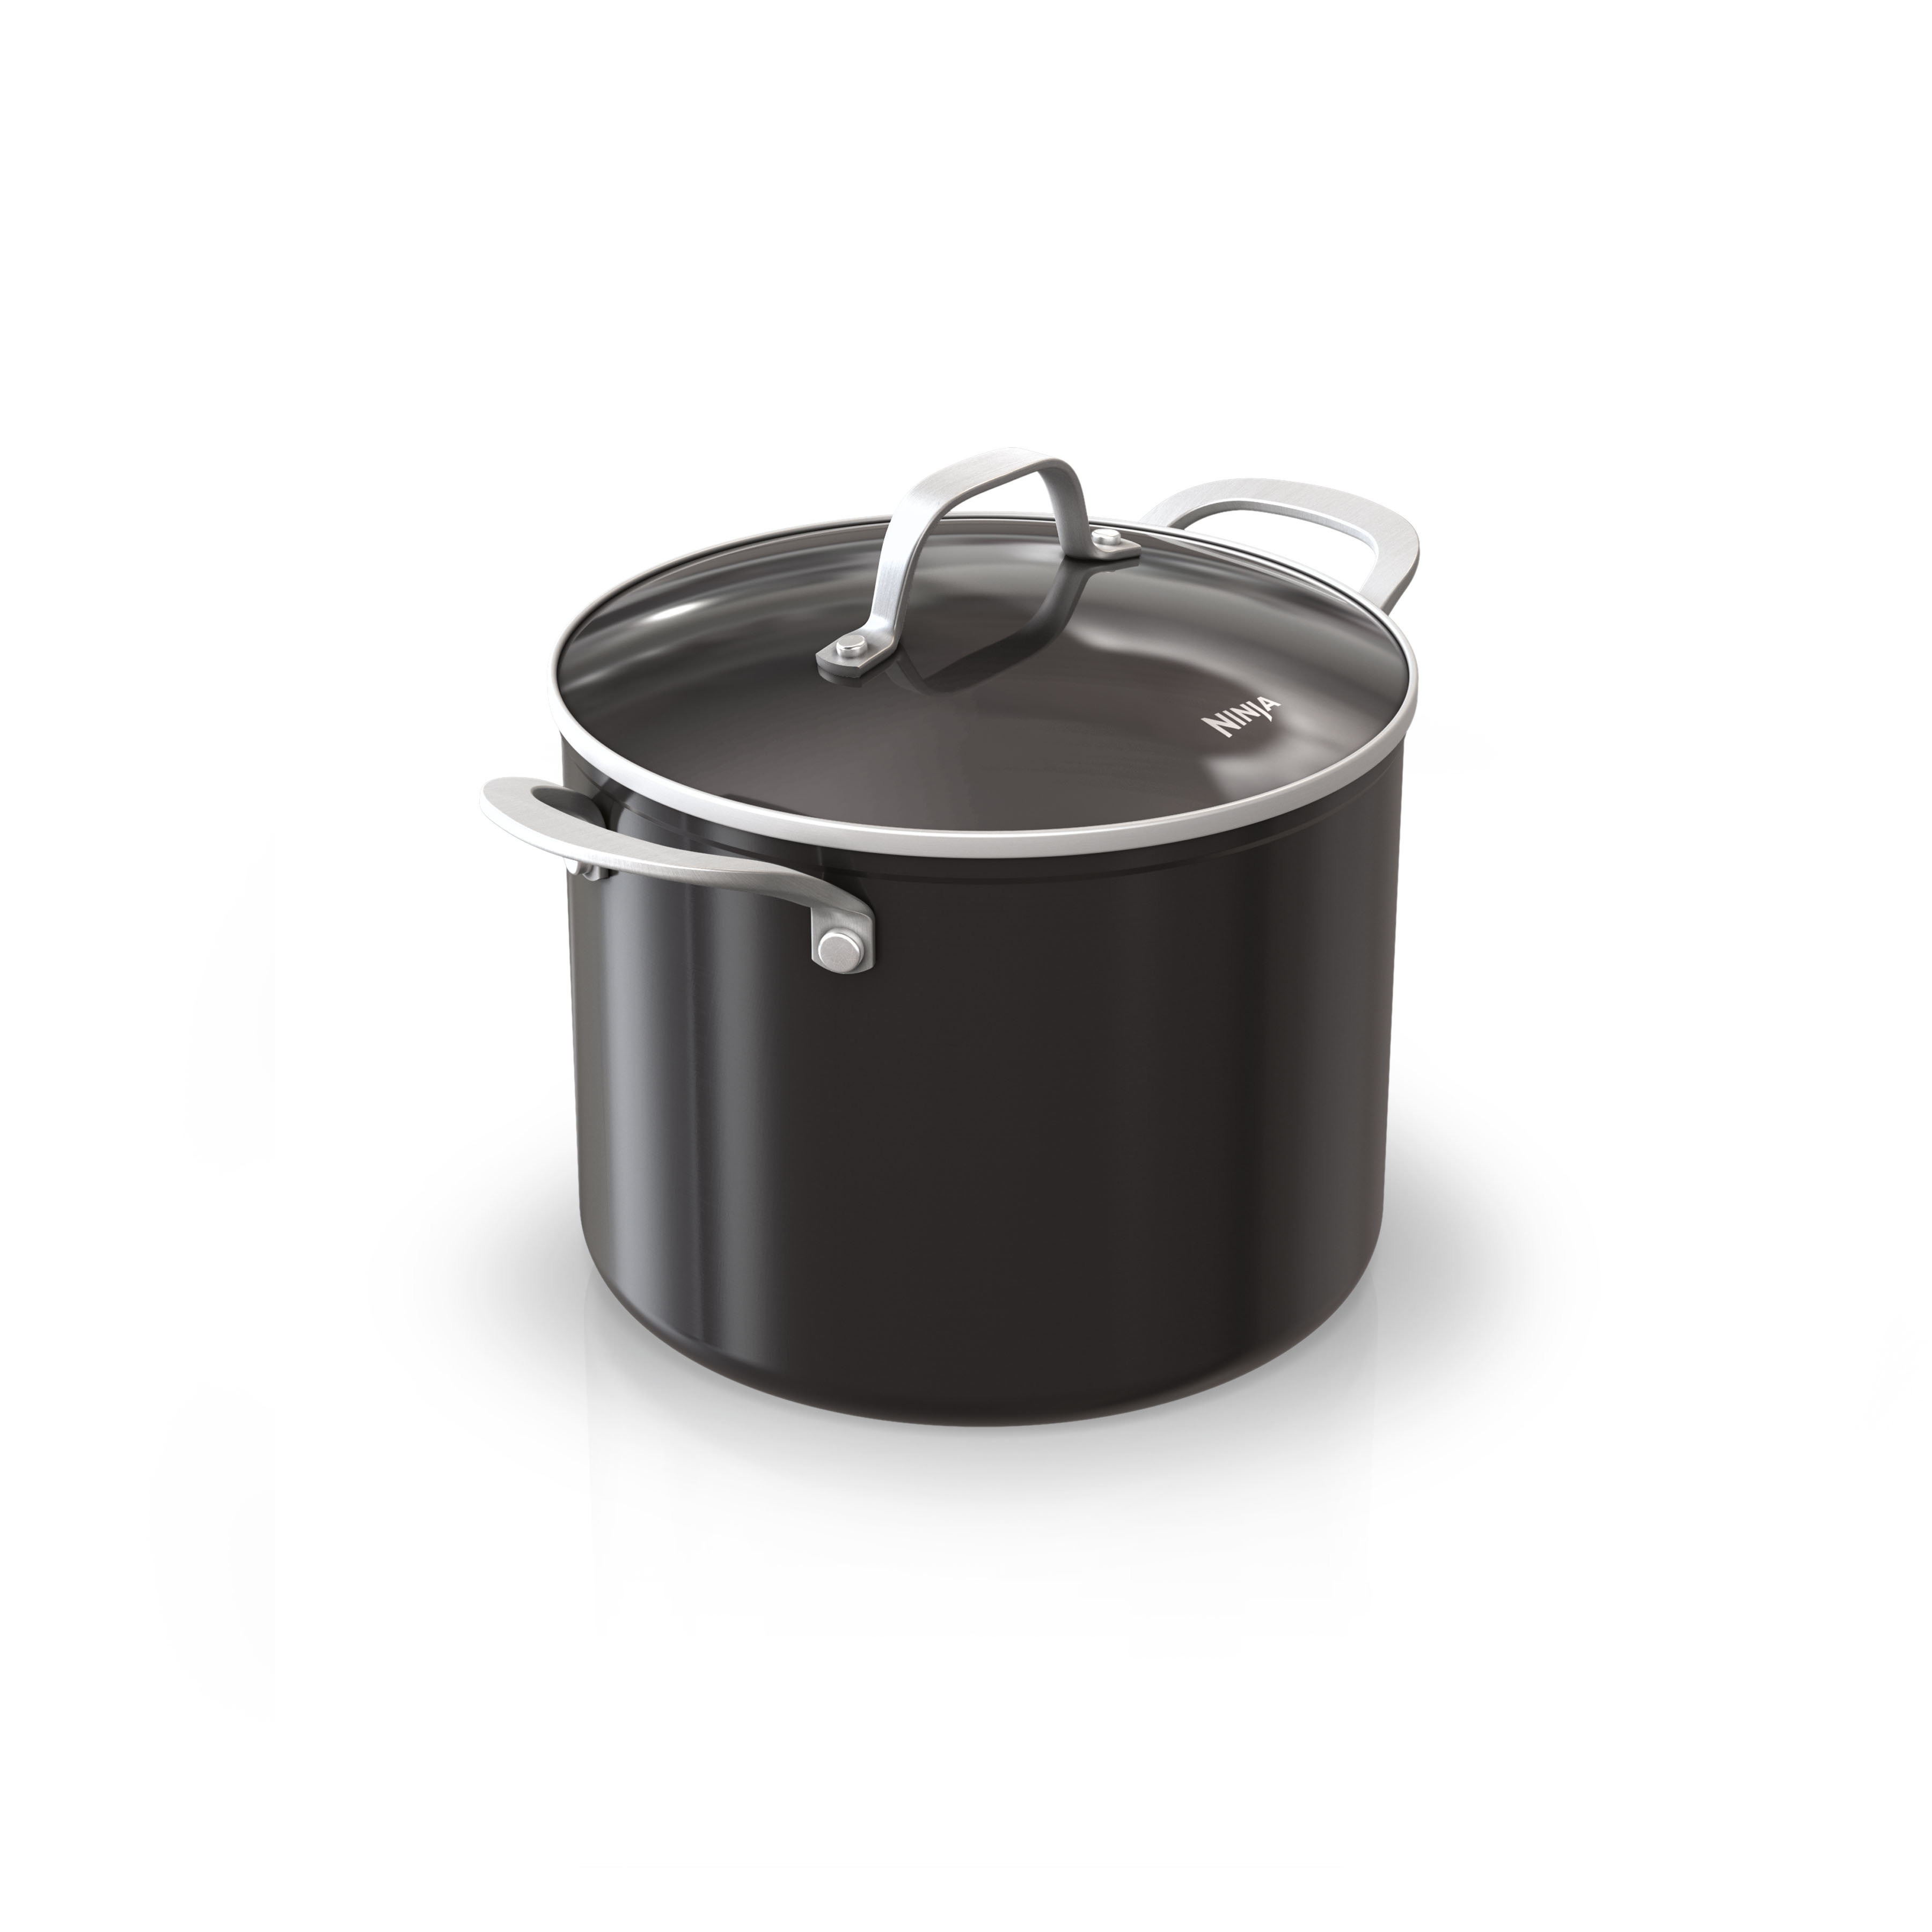 Ninja C10465 Foodi NeverStick Premium 6.5-Quart Stock Pot with